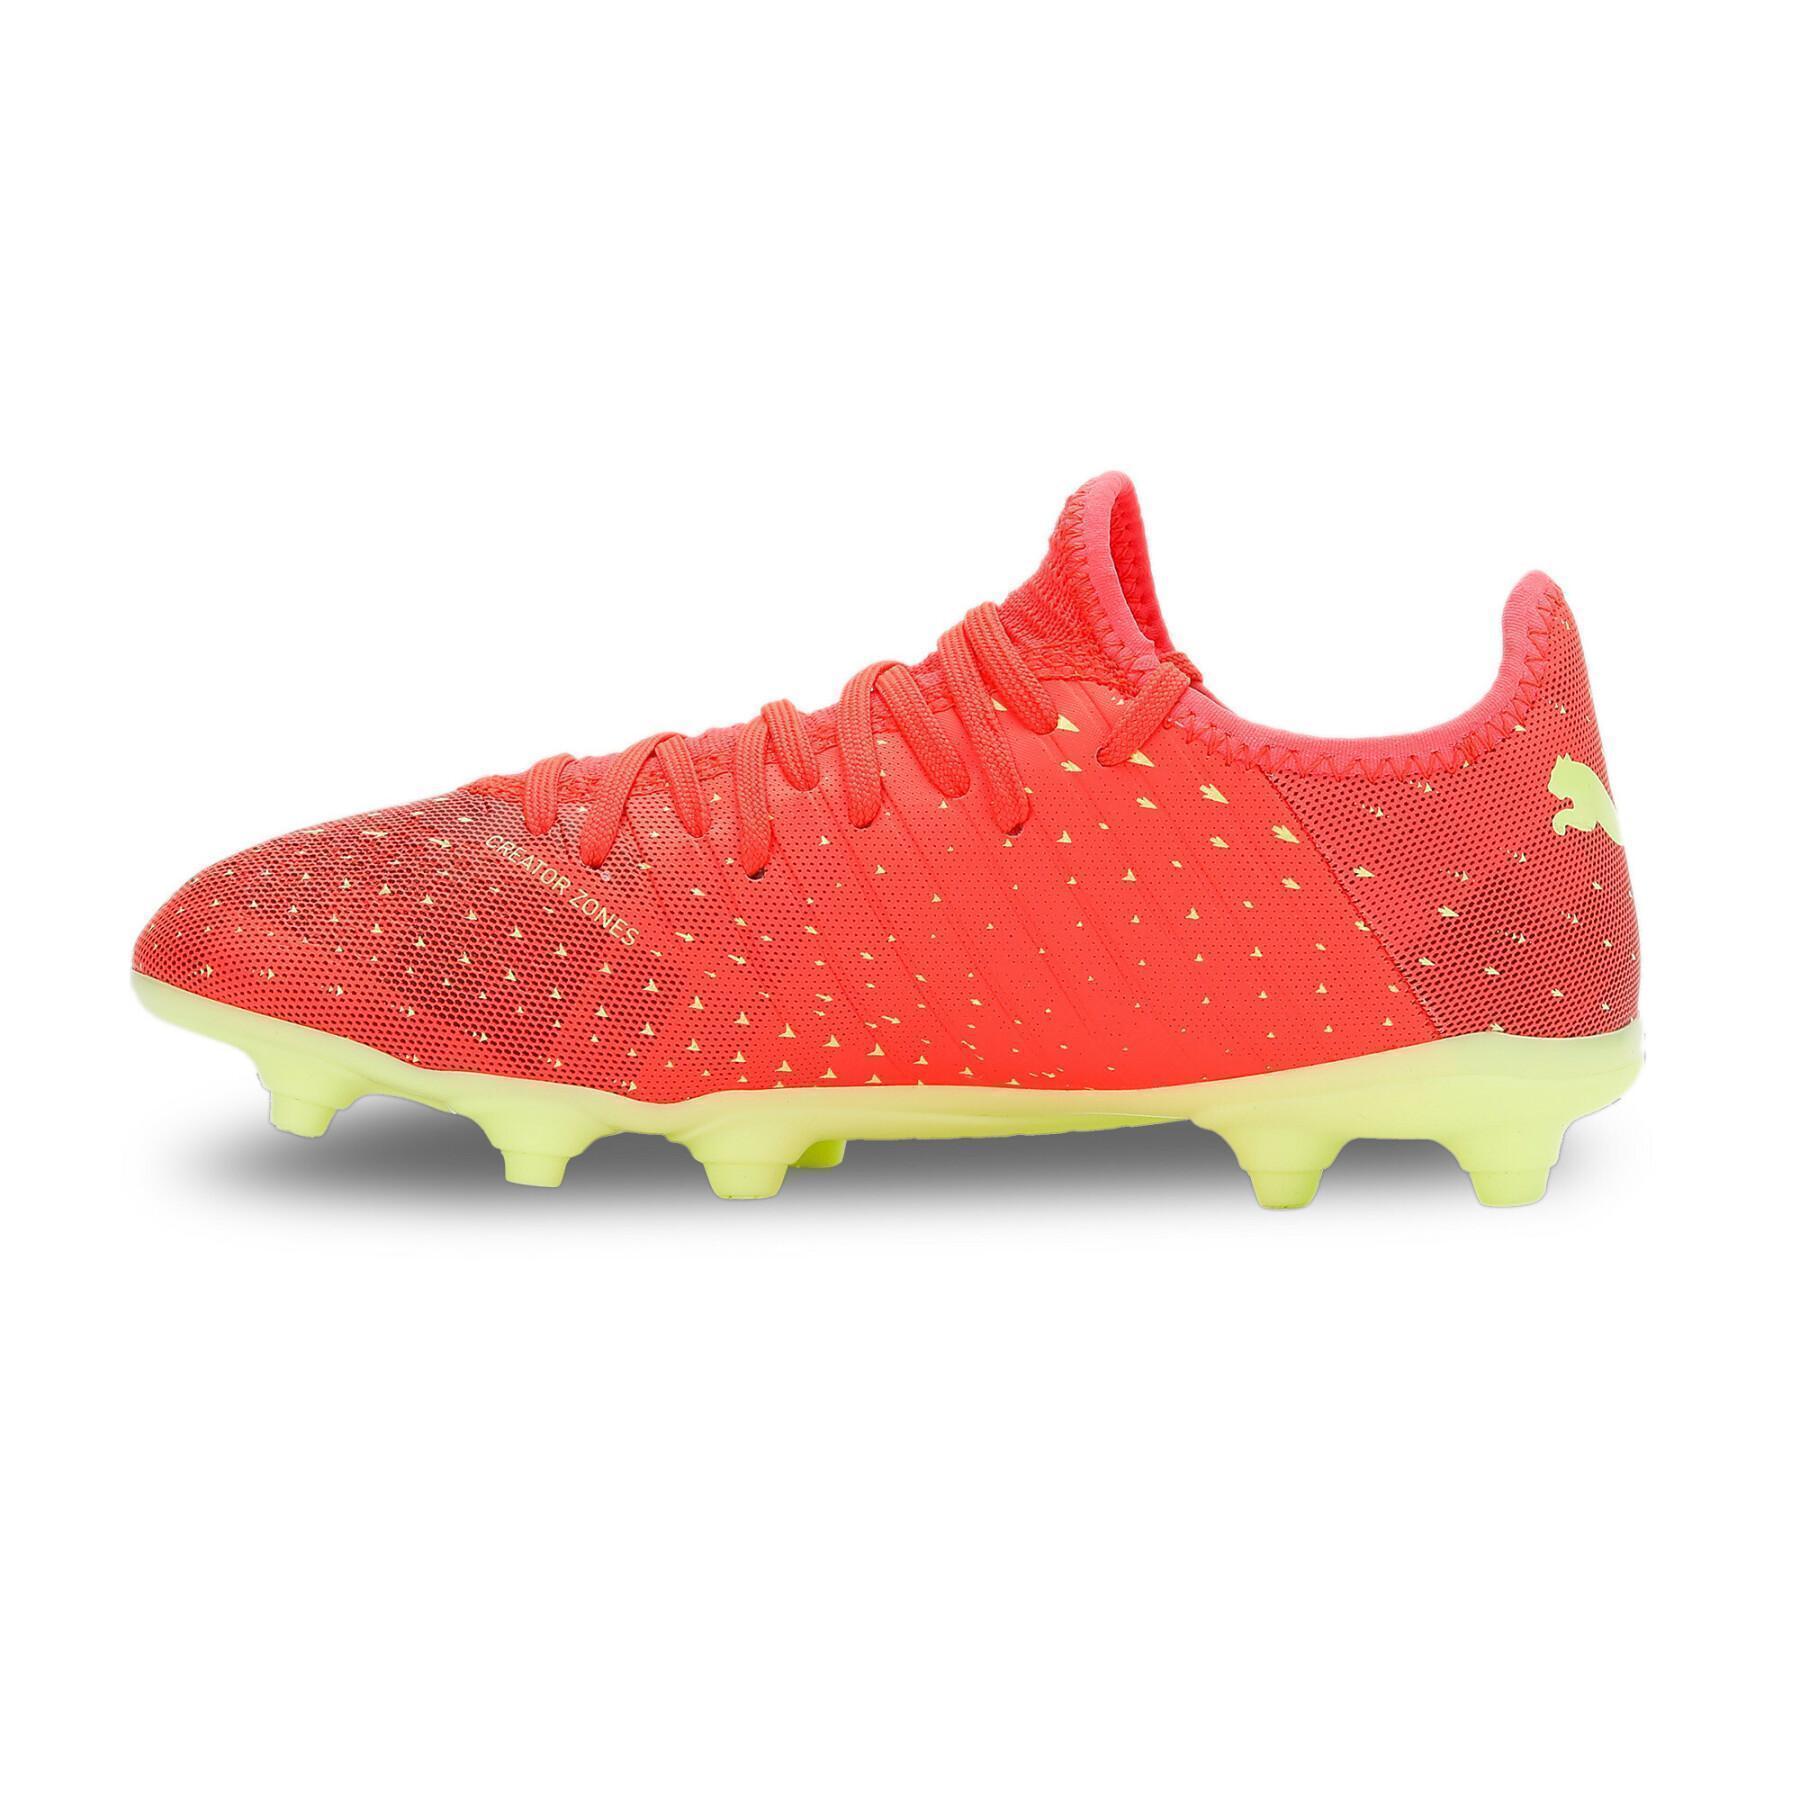 Children's soccer shoes Puma Future Z 4.4 FG/AG - Fastest Pack